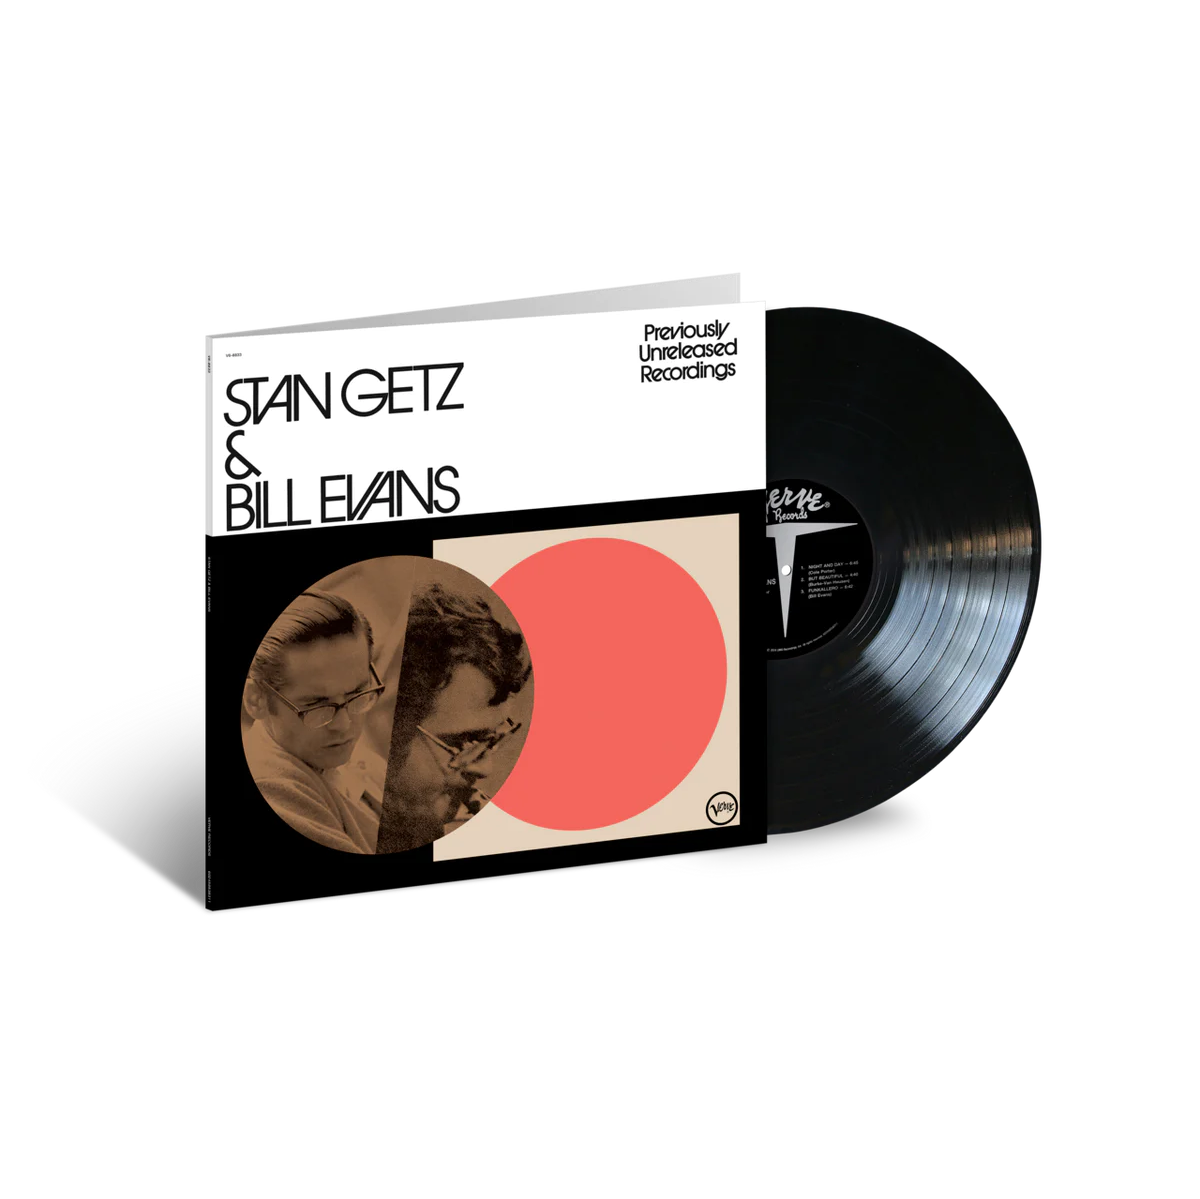 Stan Getz, Bill Evans - Previously Unreleased Recordings (Acoustic Sounds): Vinyl LP